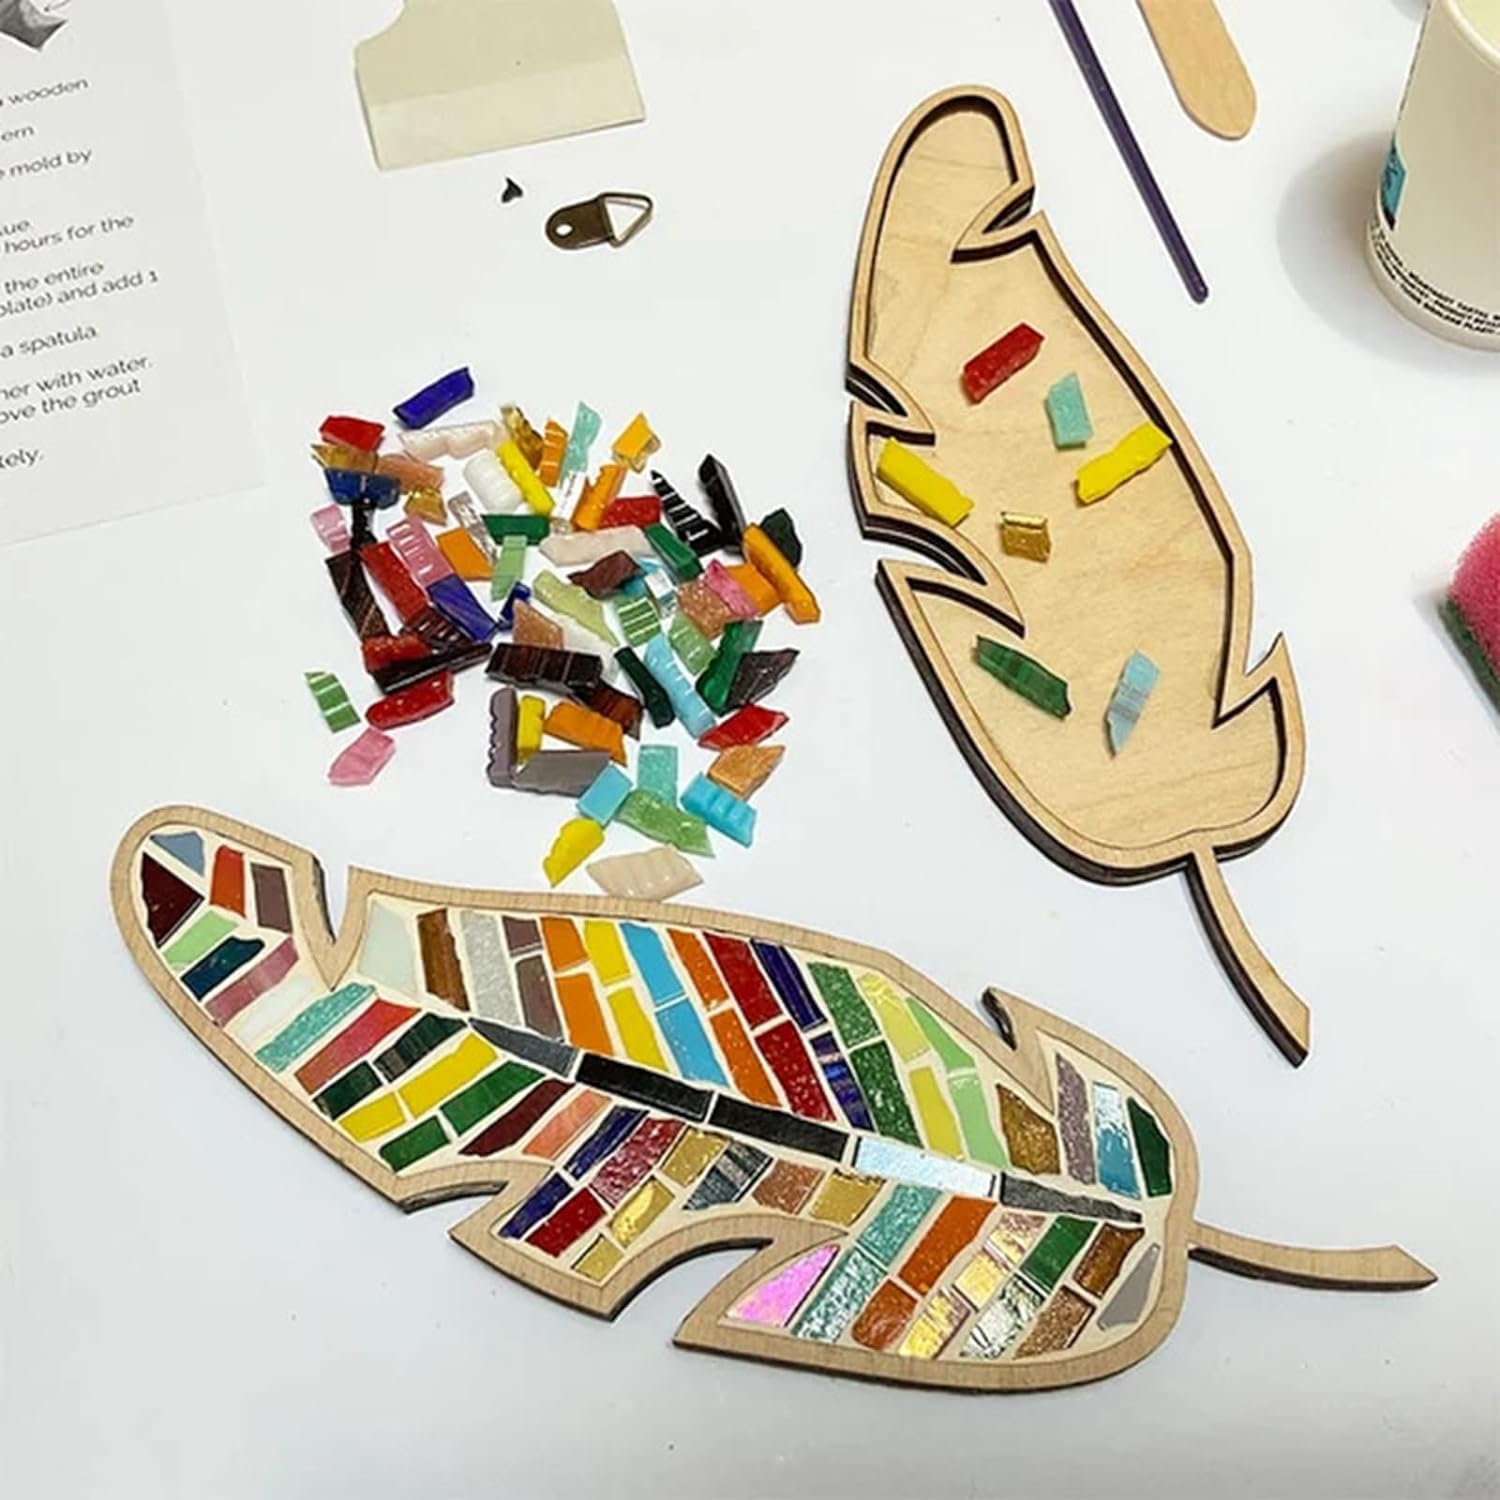 DIY Mosaic Wood Craft Kits for Kids & Adults